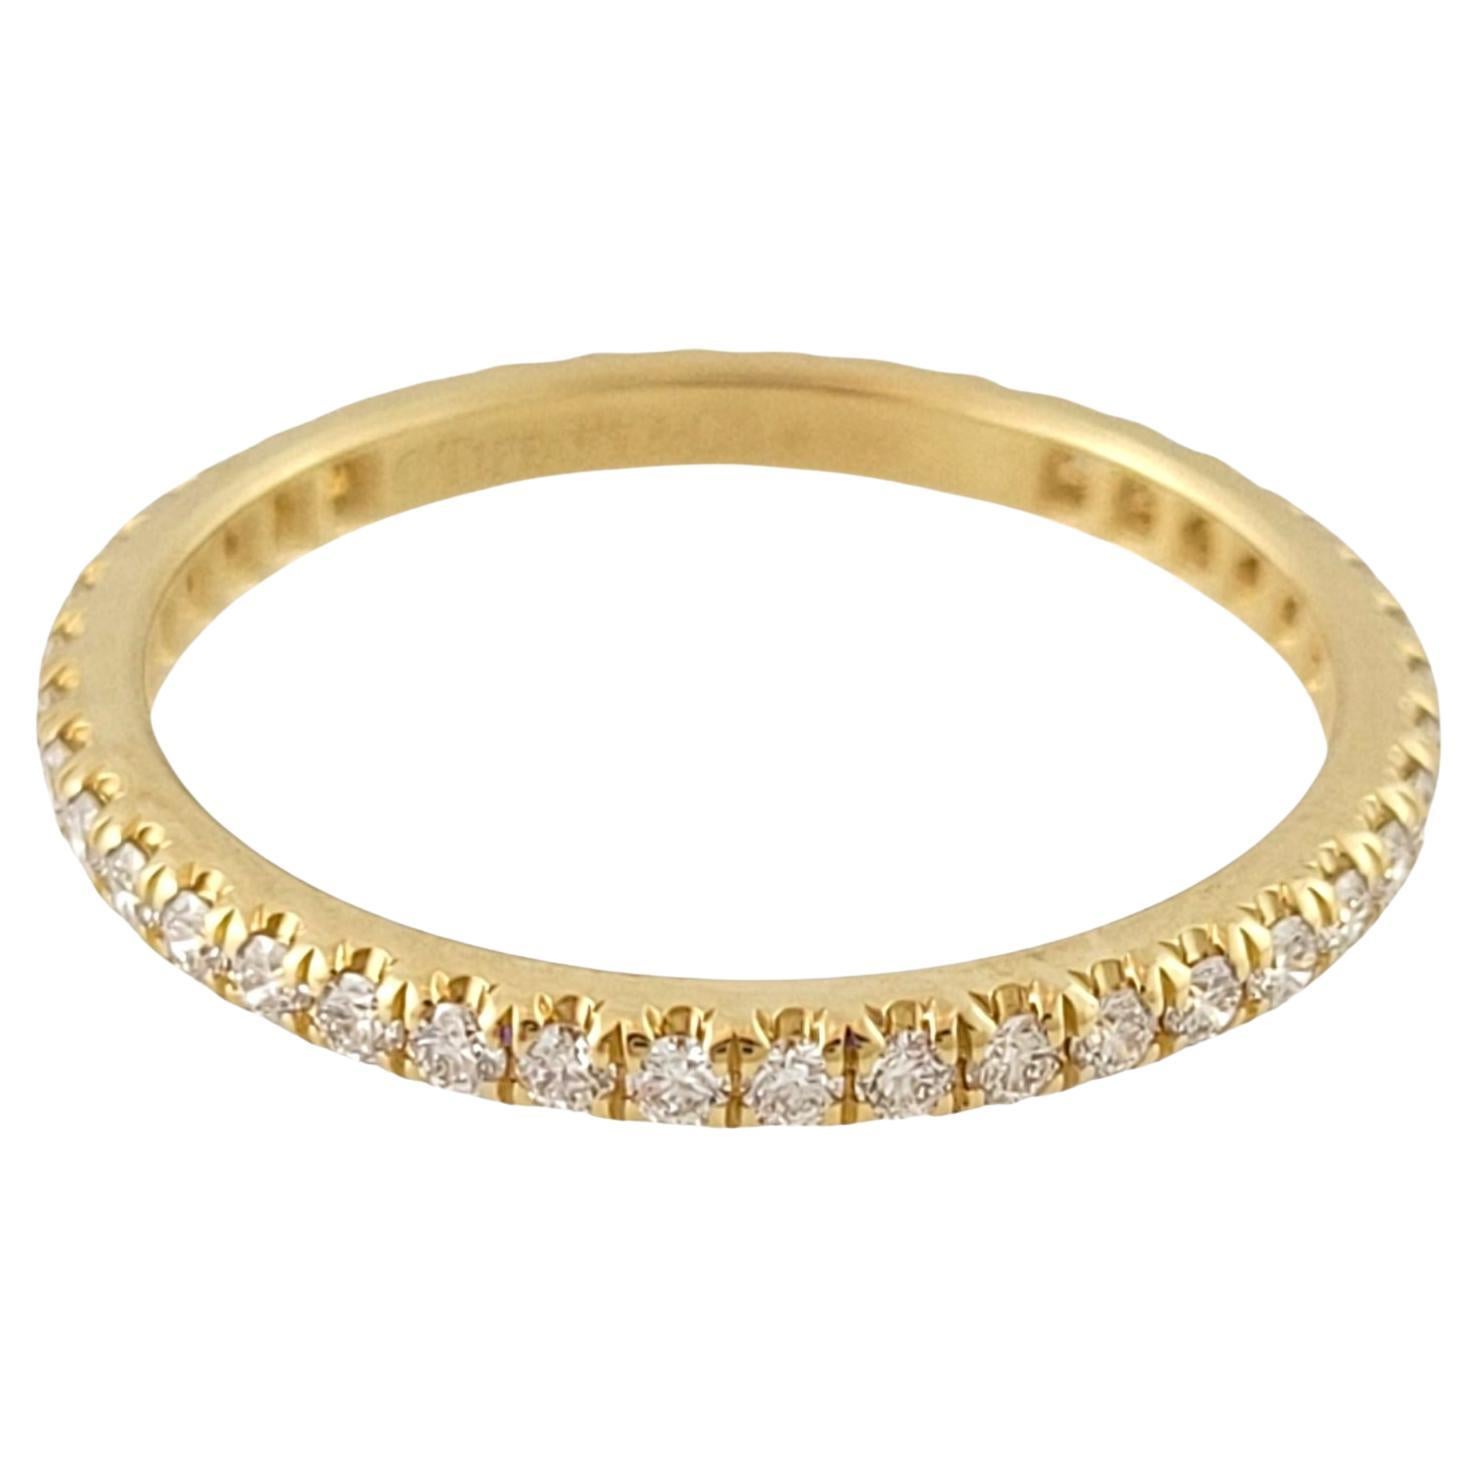 Tiffany & Co. Soleste 18k Yellow Gold Full Circle Diamond Eternity Band